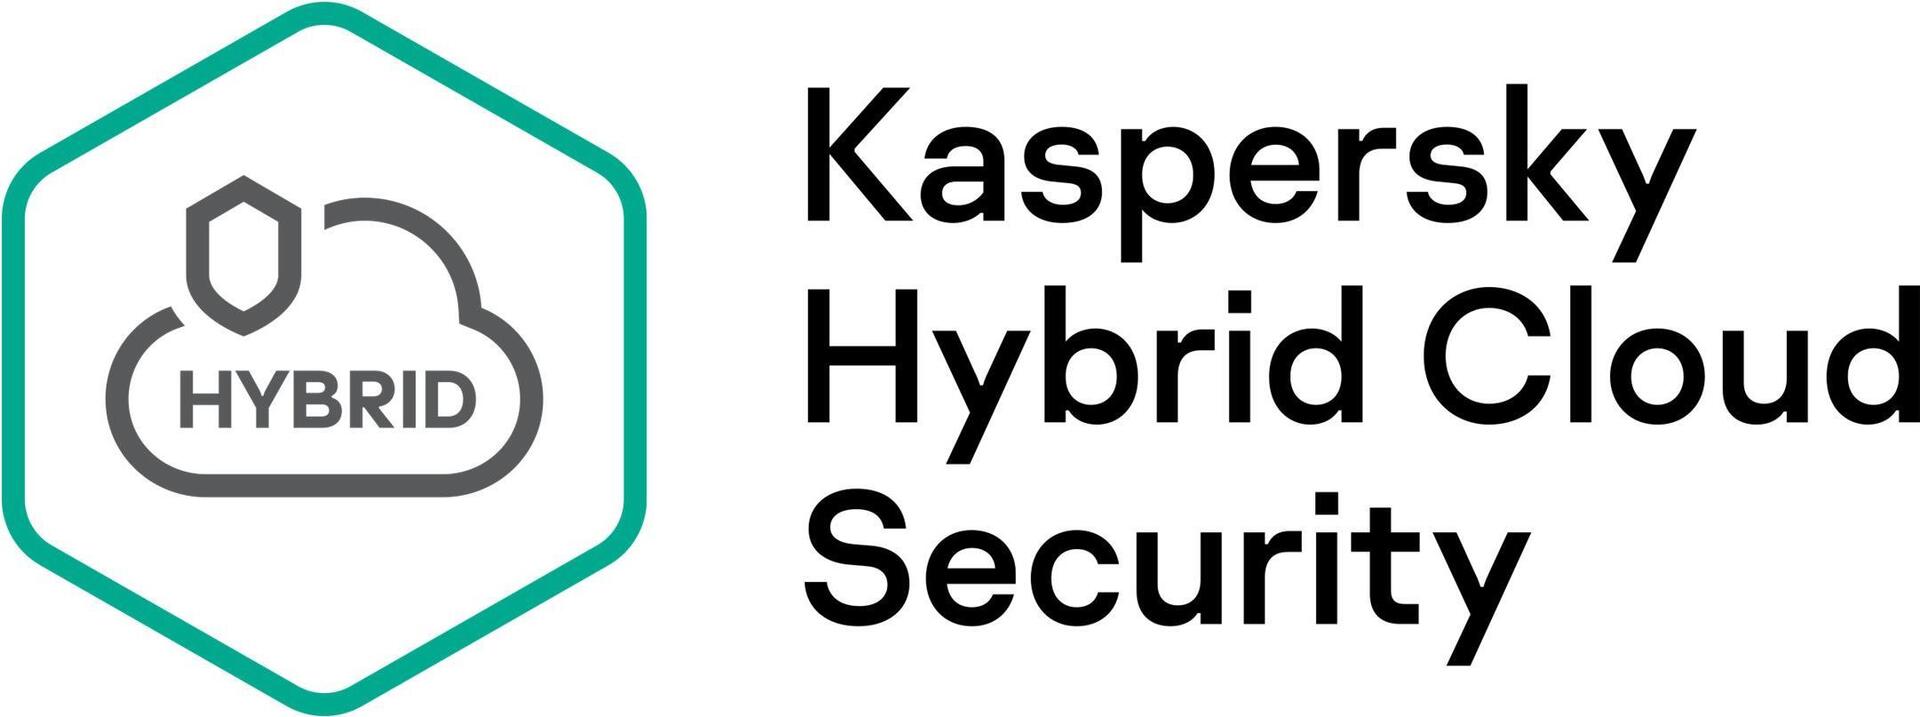 Kaspersky Hybrid Cloud Security Desktop (KL4155XAPT8)